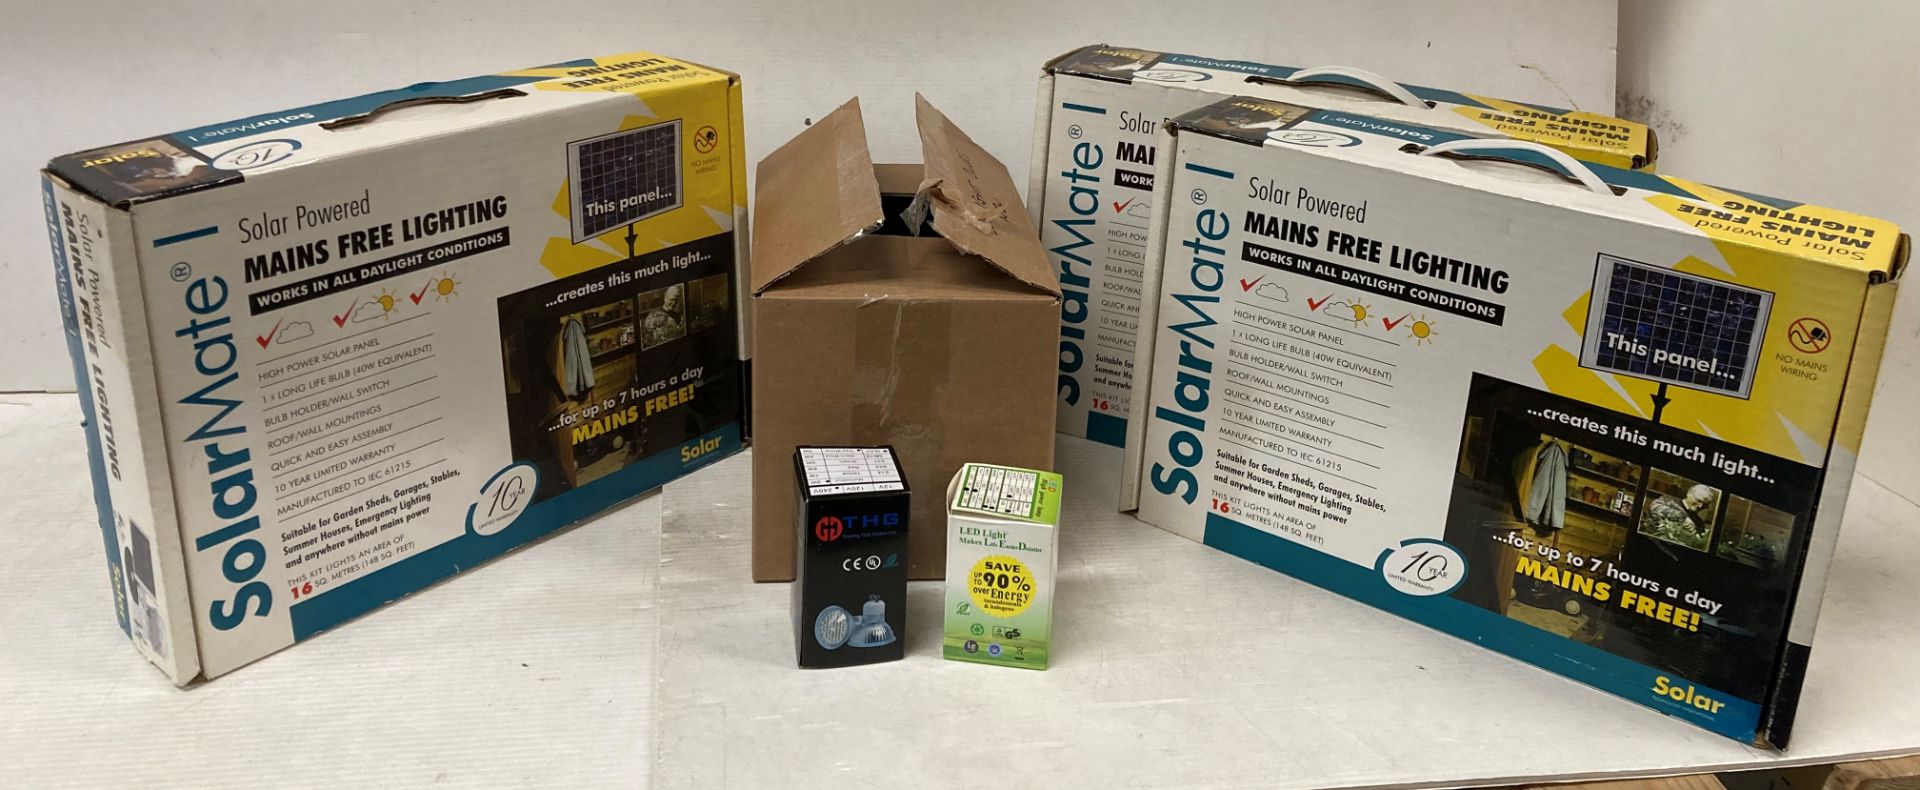 3 x Solarmate solar powered mains free lighting and a box of small LED bulbs (saleroom location: